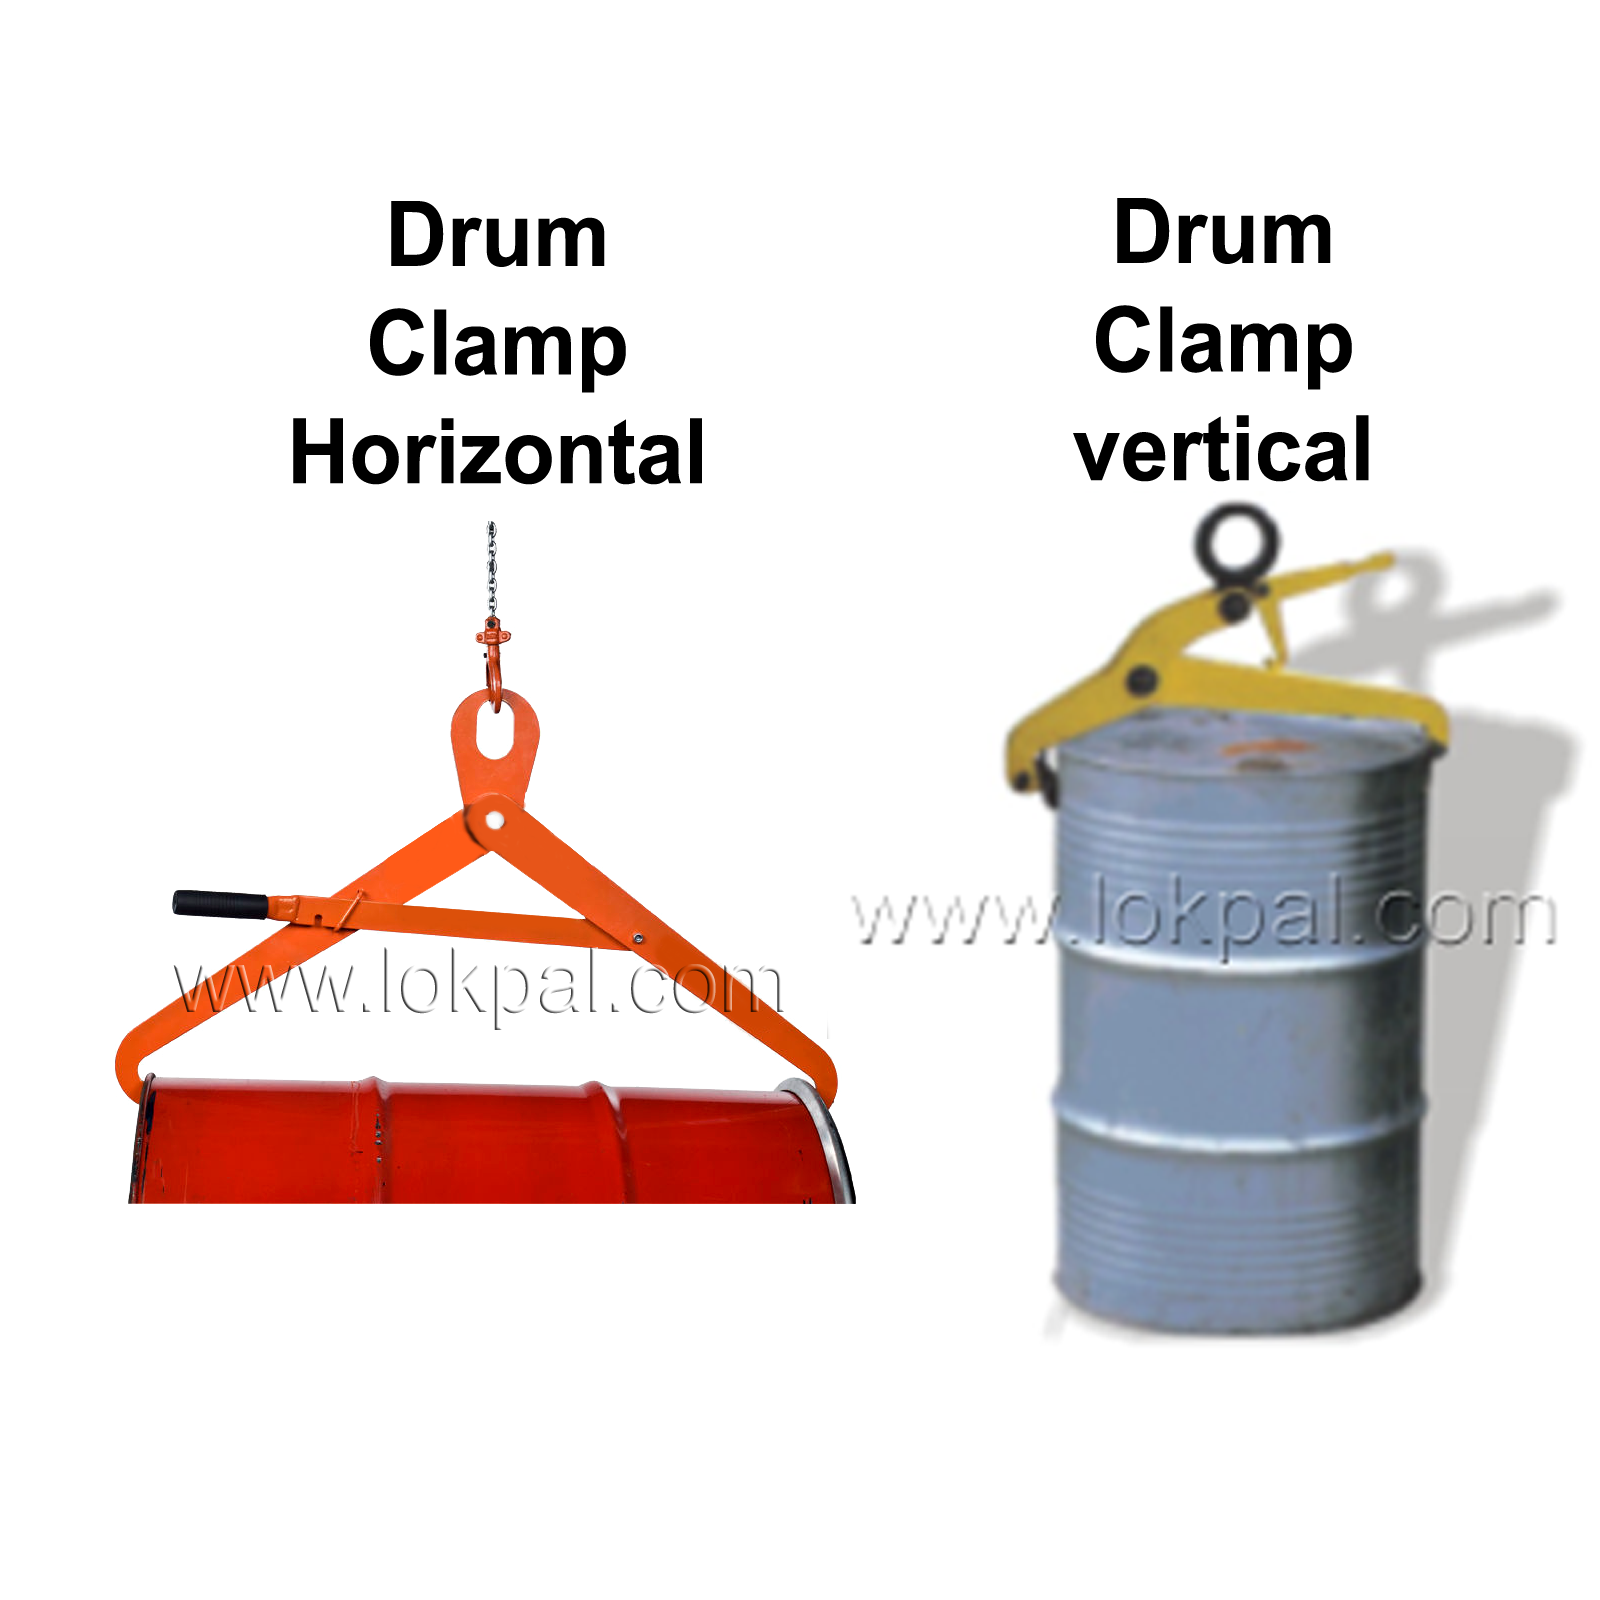 Drum Clamps, Drum Clamps Manufacturer, Drum Clamp Vertical, Drum Clamps Wholesaler, Drum Equipments Supplier, Drum Clamp Horizontal, Dealers, Delhi NCR, Noida, India